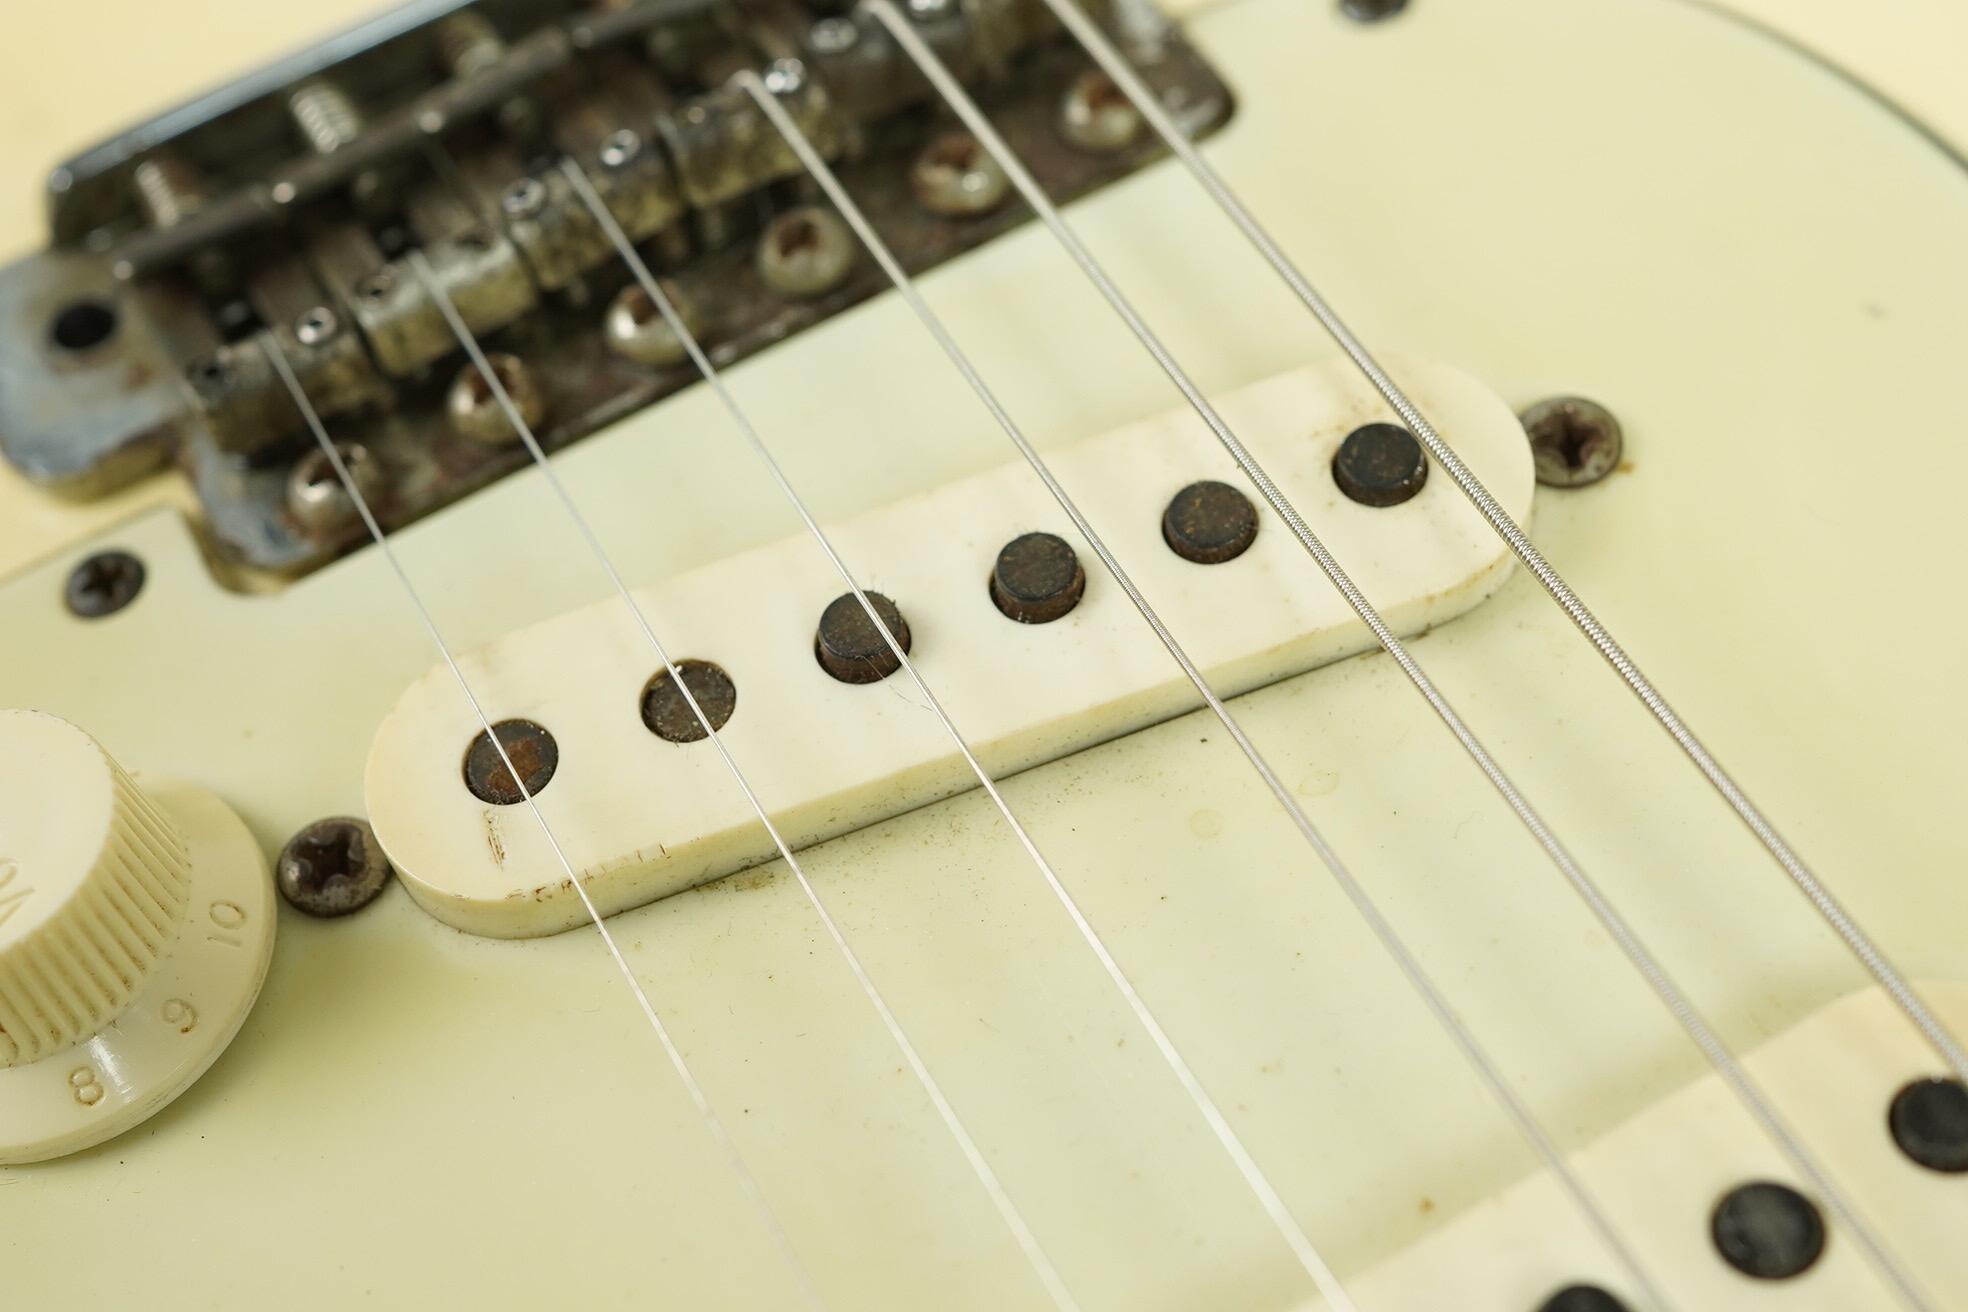 1964 Fender Stratocaster Korina Body Olympic White